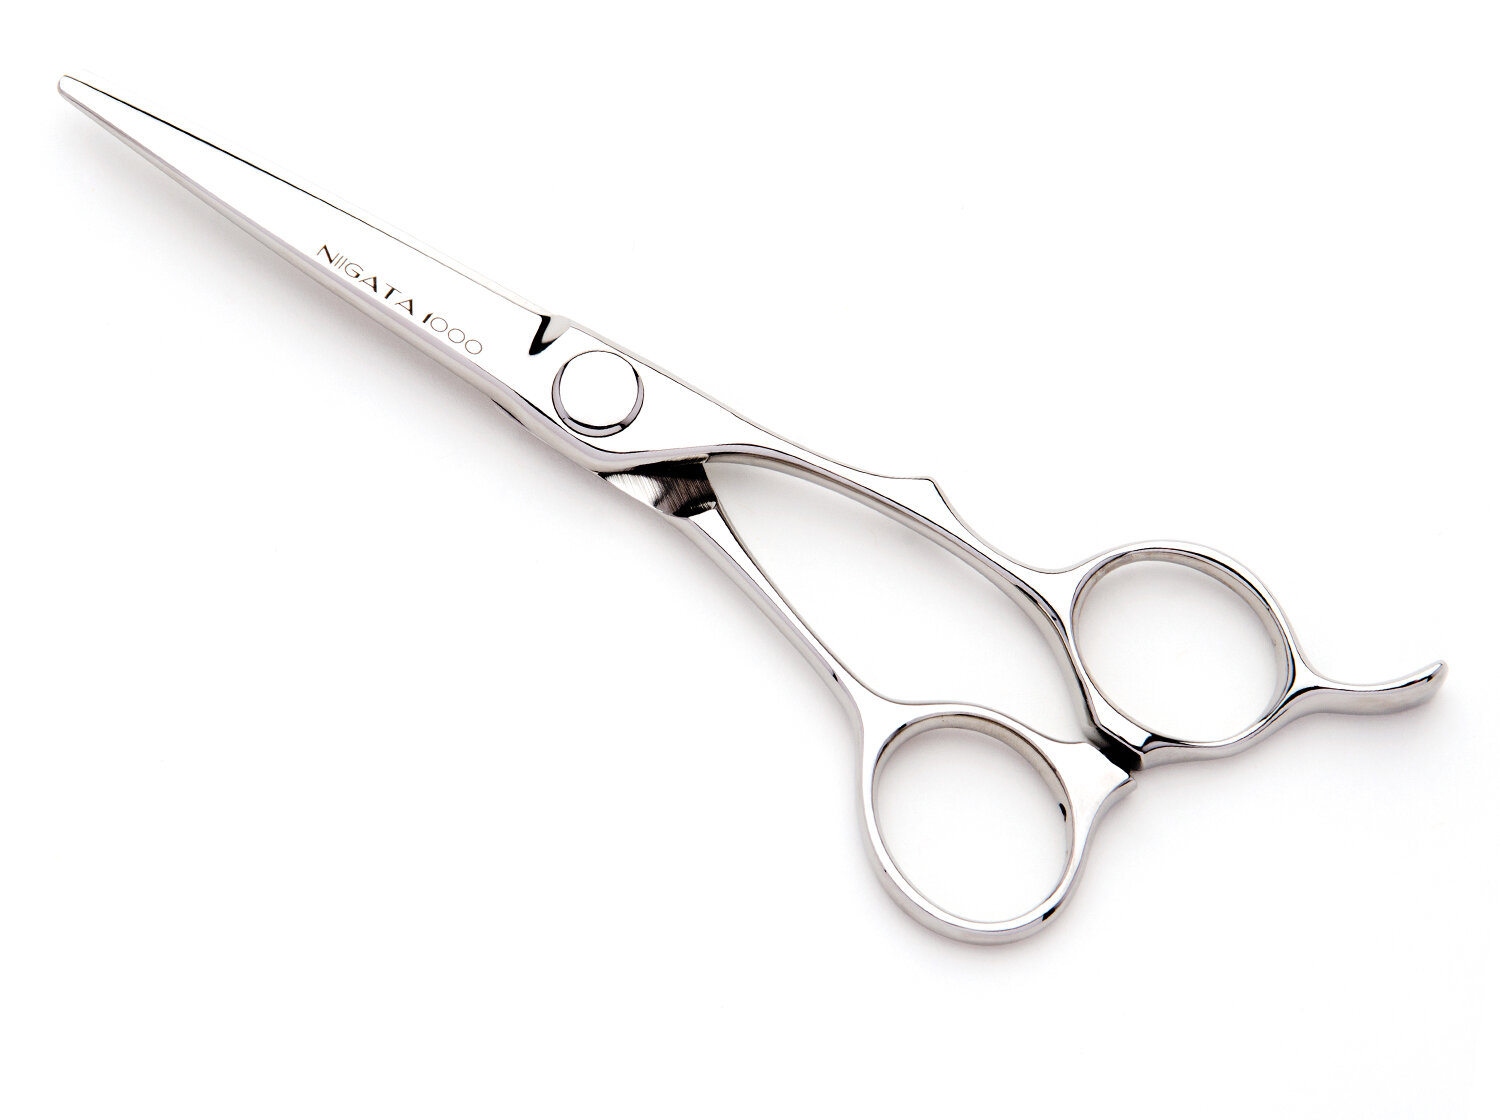 professional hair stylist scissors